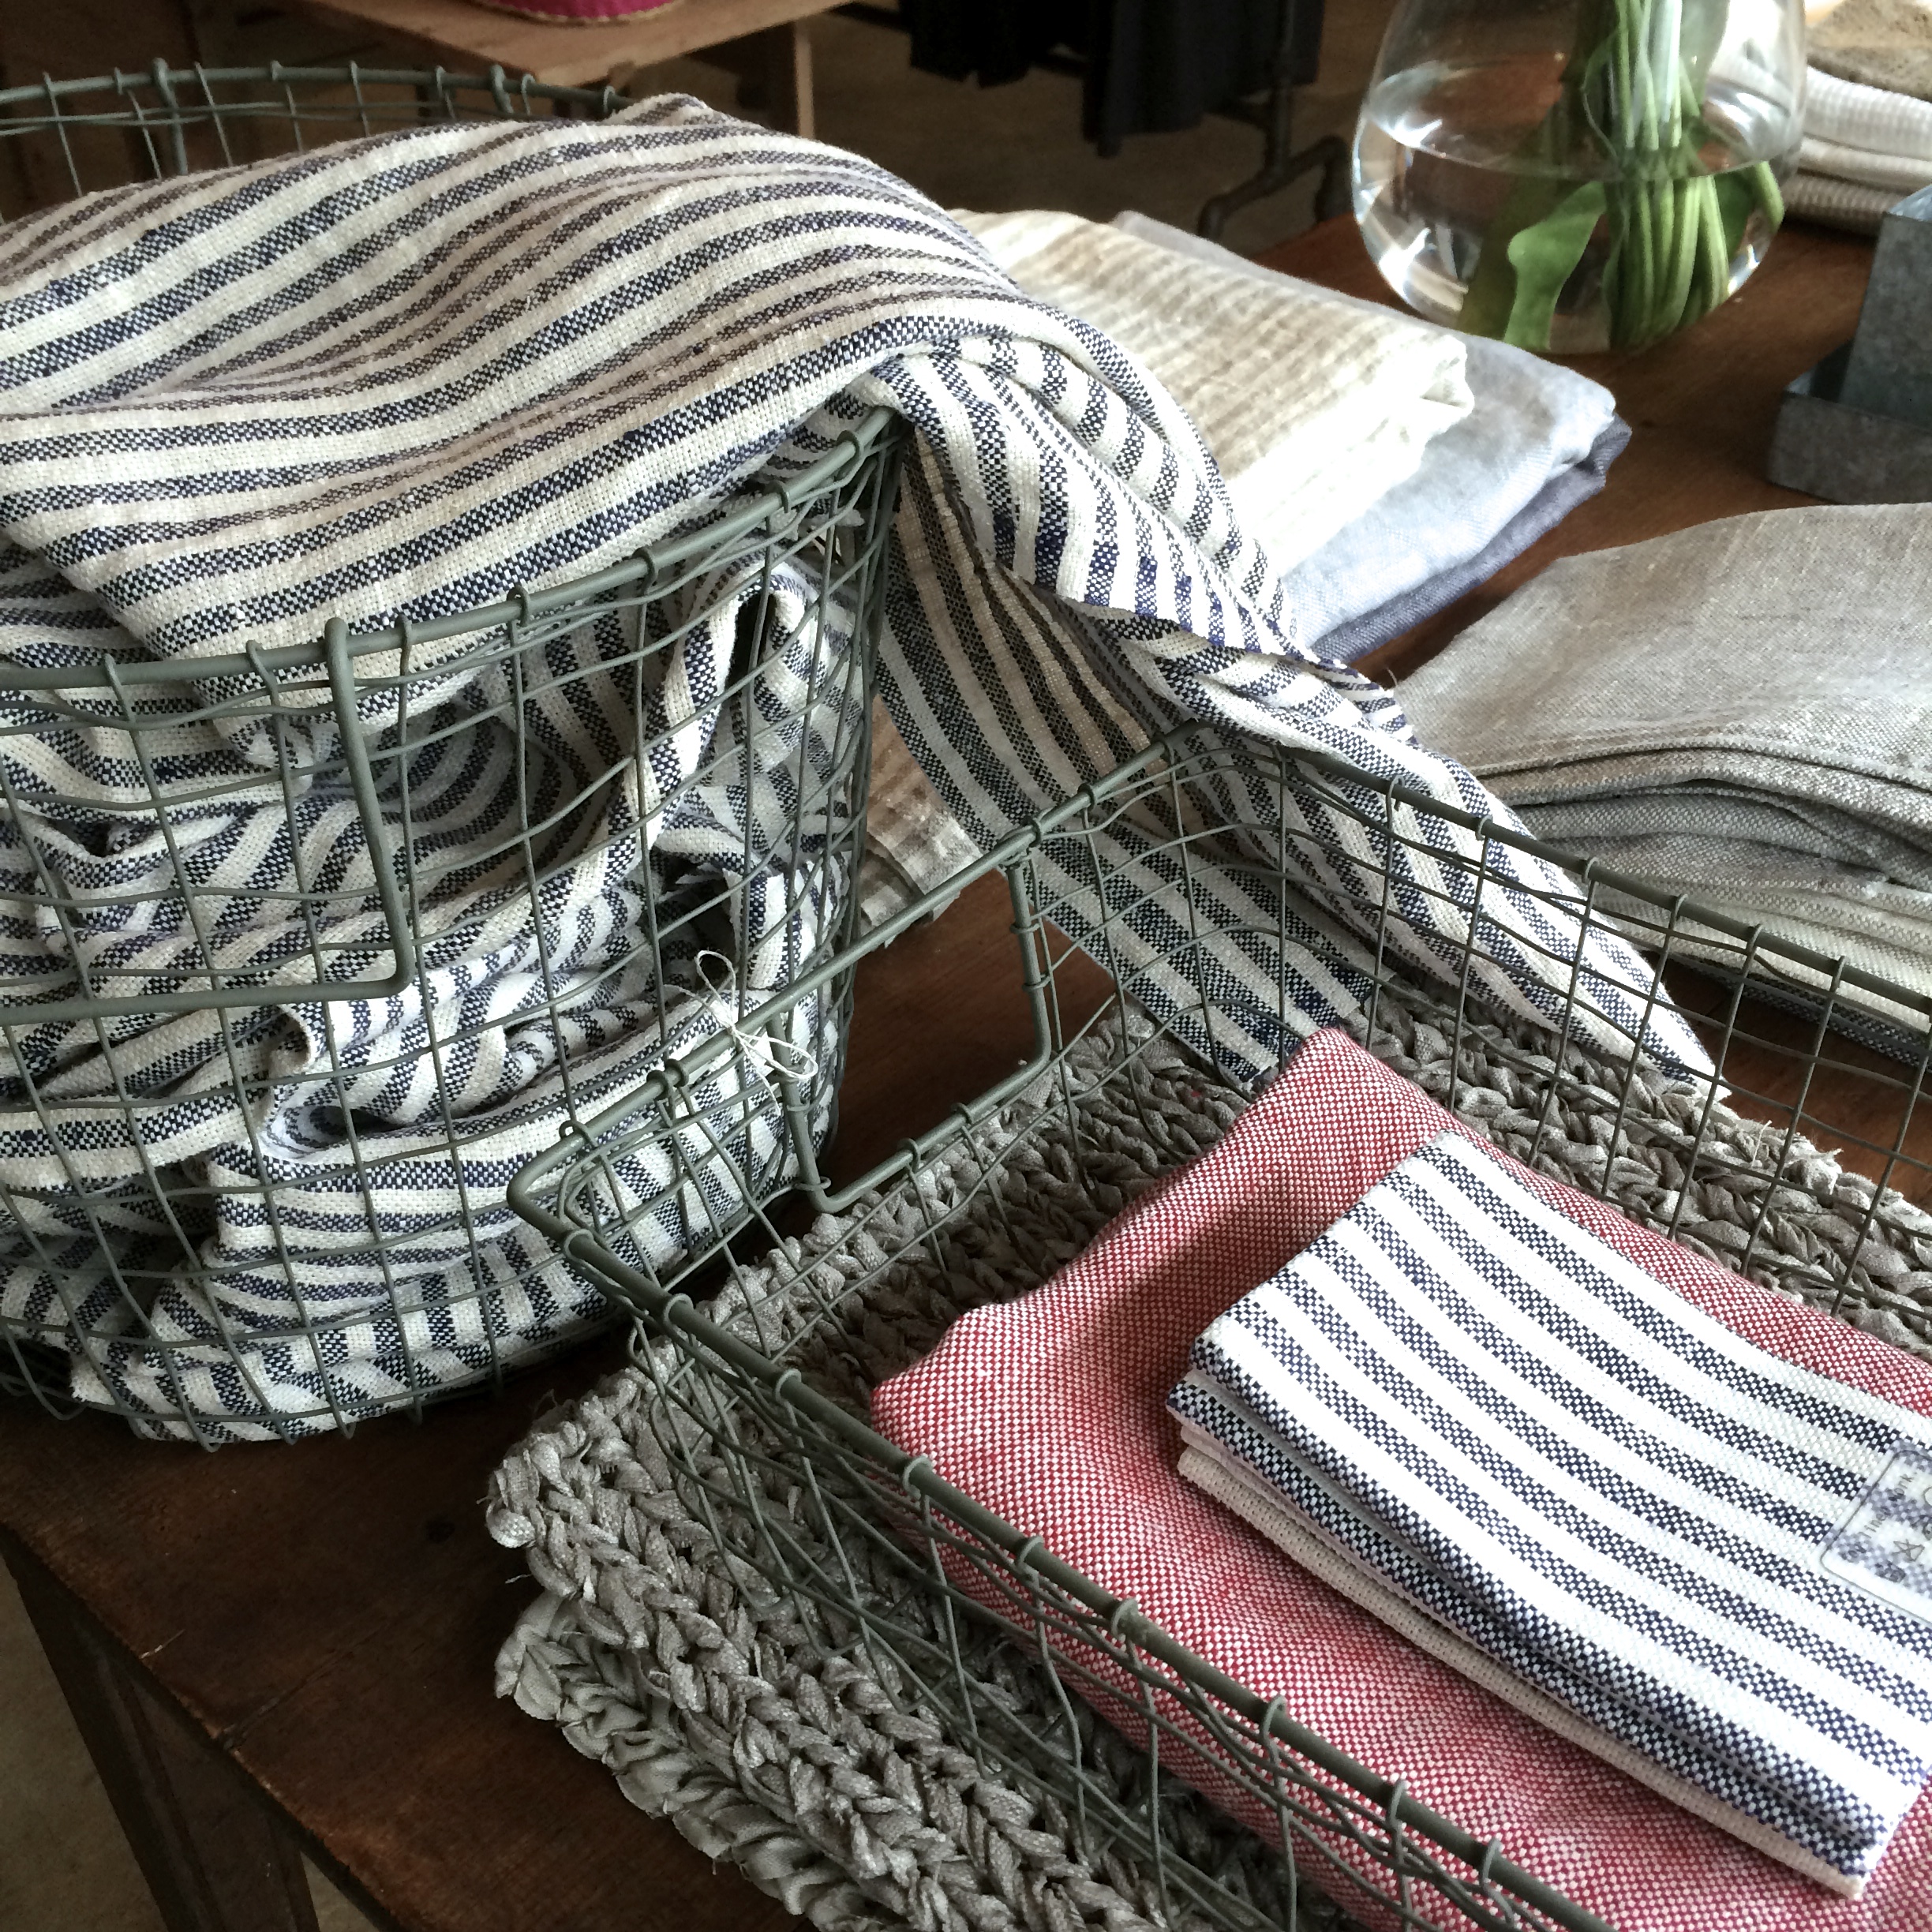 tokyo series: linens and textiles — Carol on Carroll